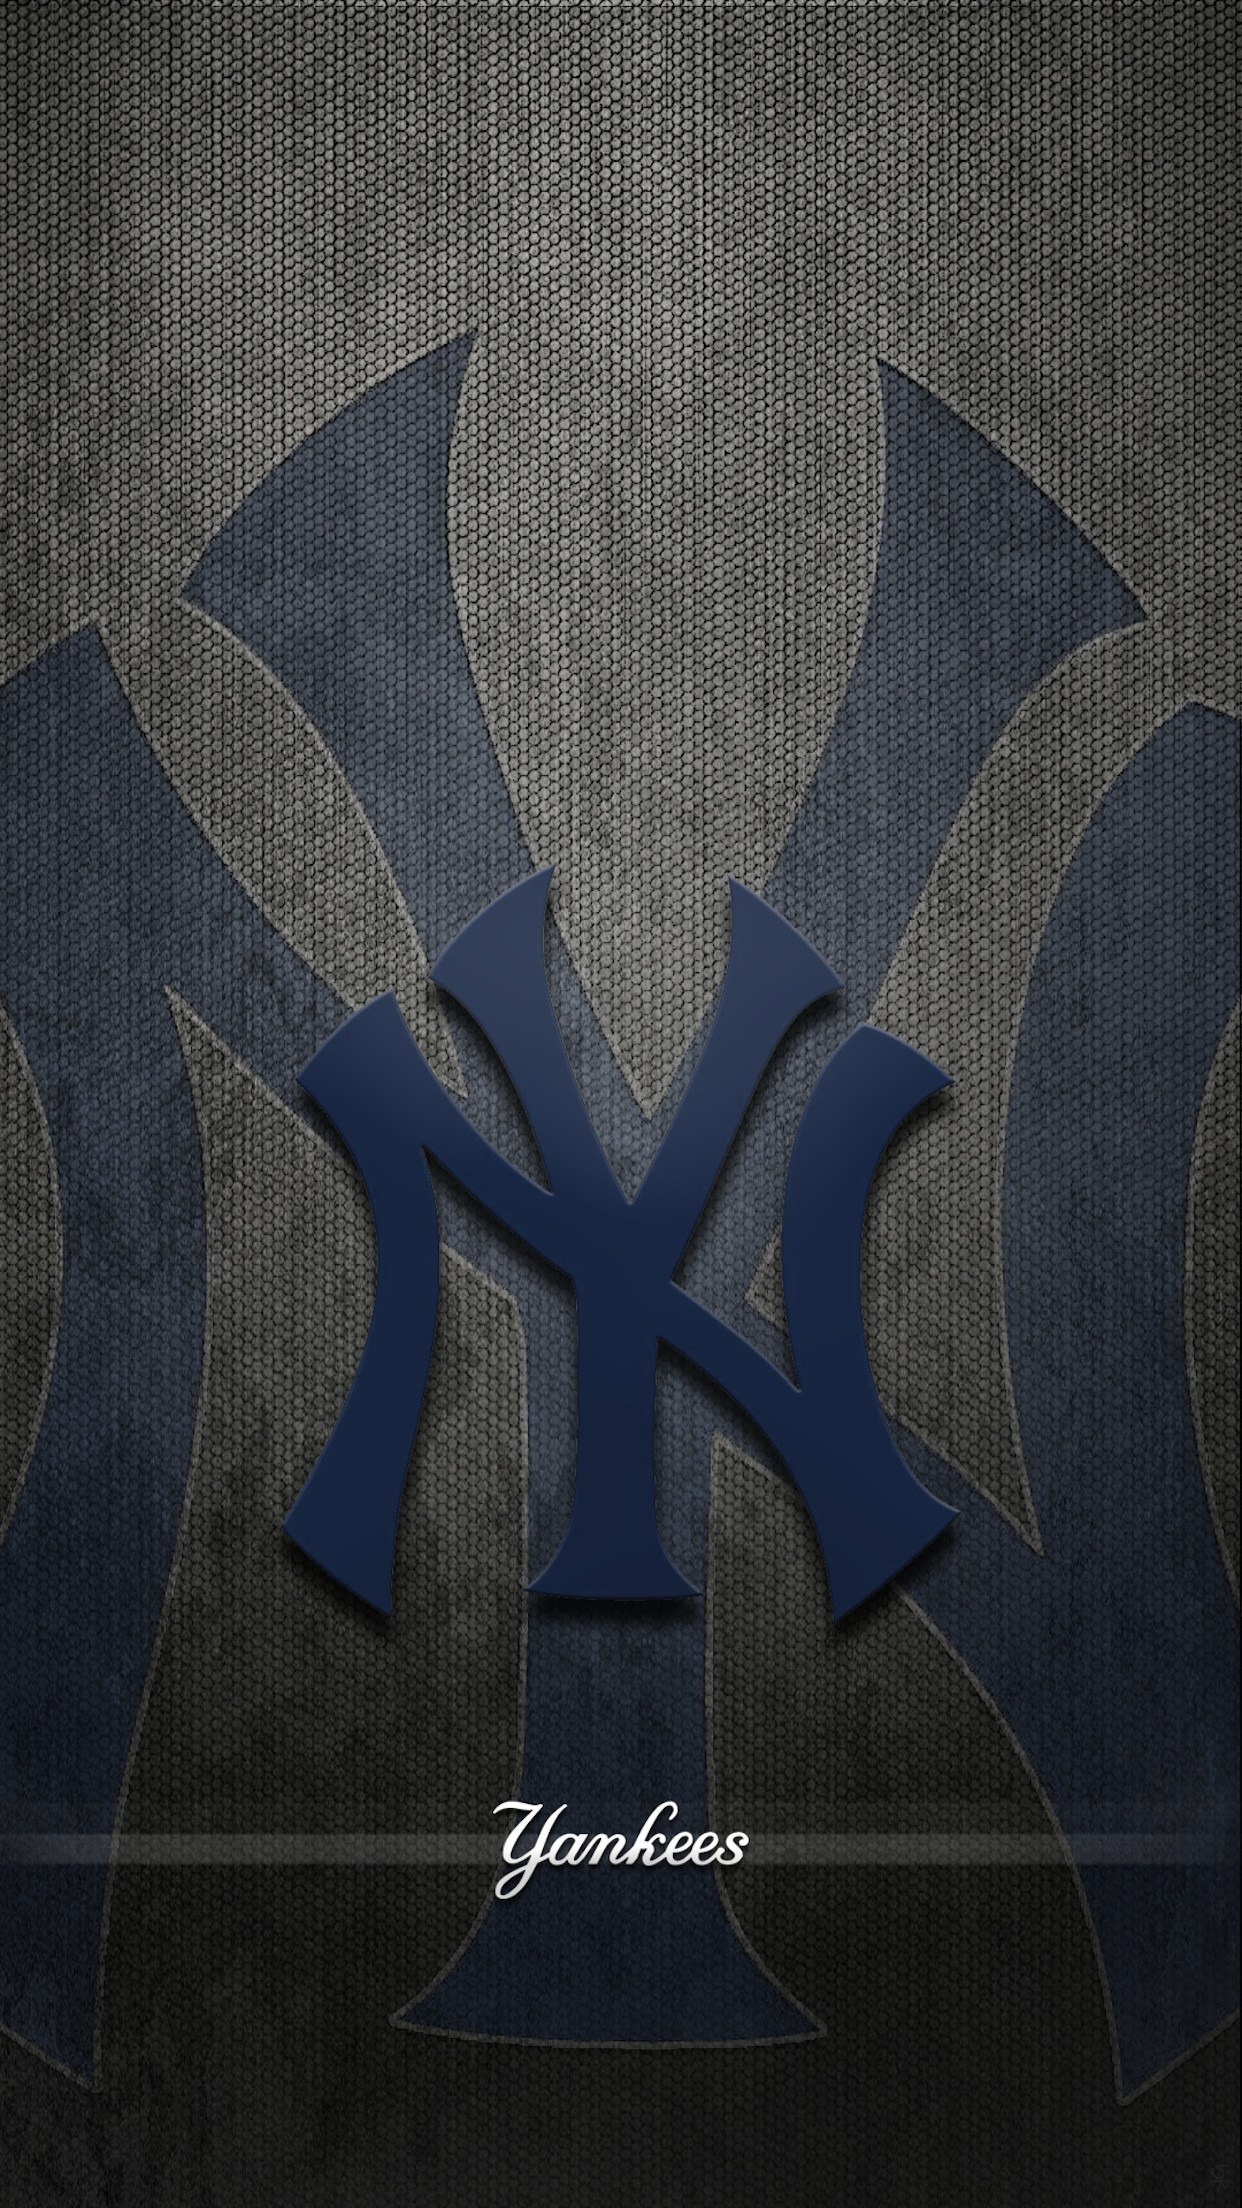 New York Yankees Wallpaper Iphone - New York Yankees Iphone X , HD Wallpaper & Backgrounds